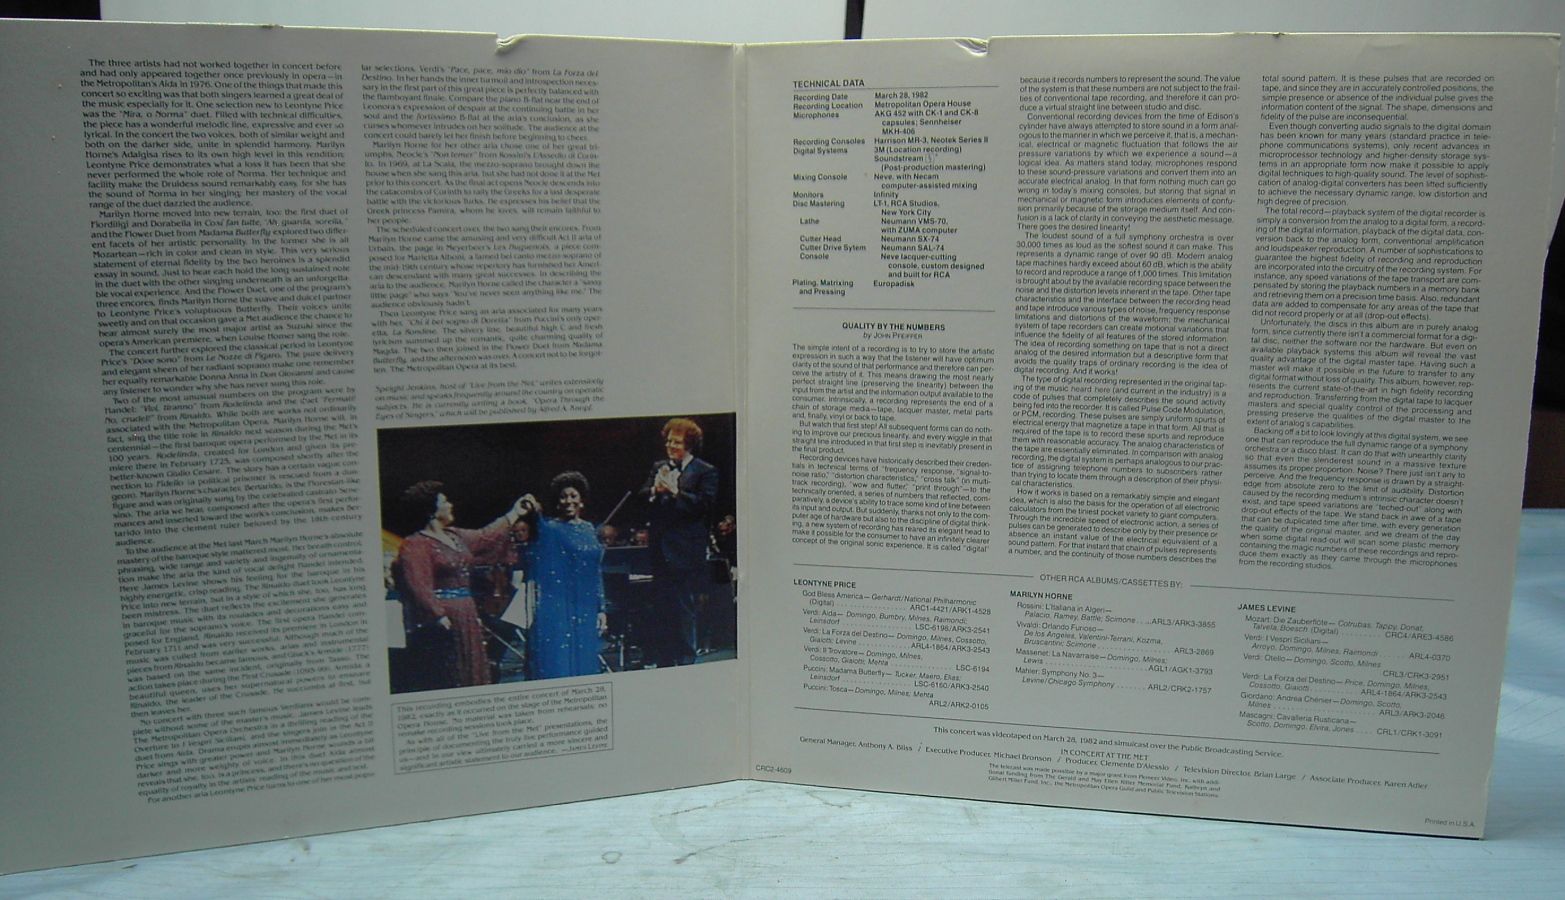 Leotyne Price Marilyn Horne Concert at The Met 2 LP Set